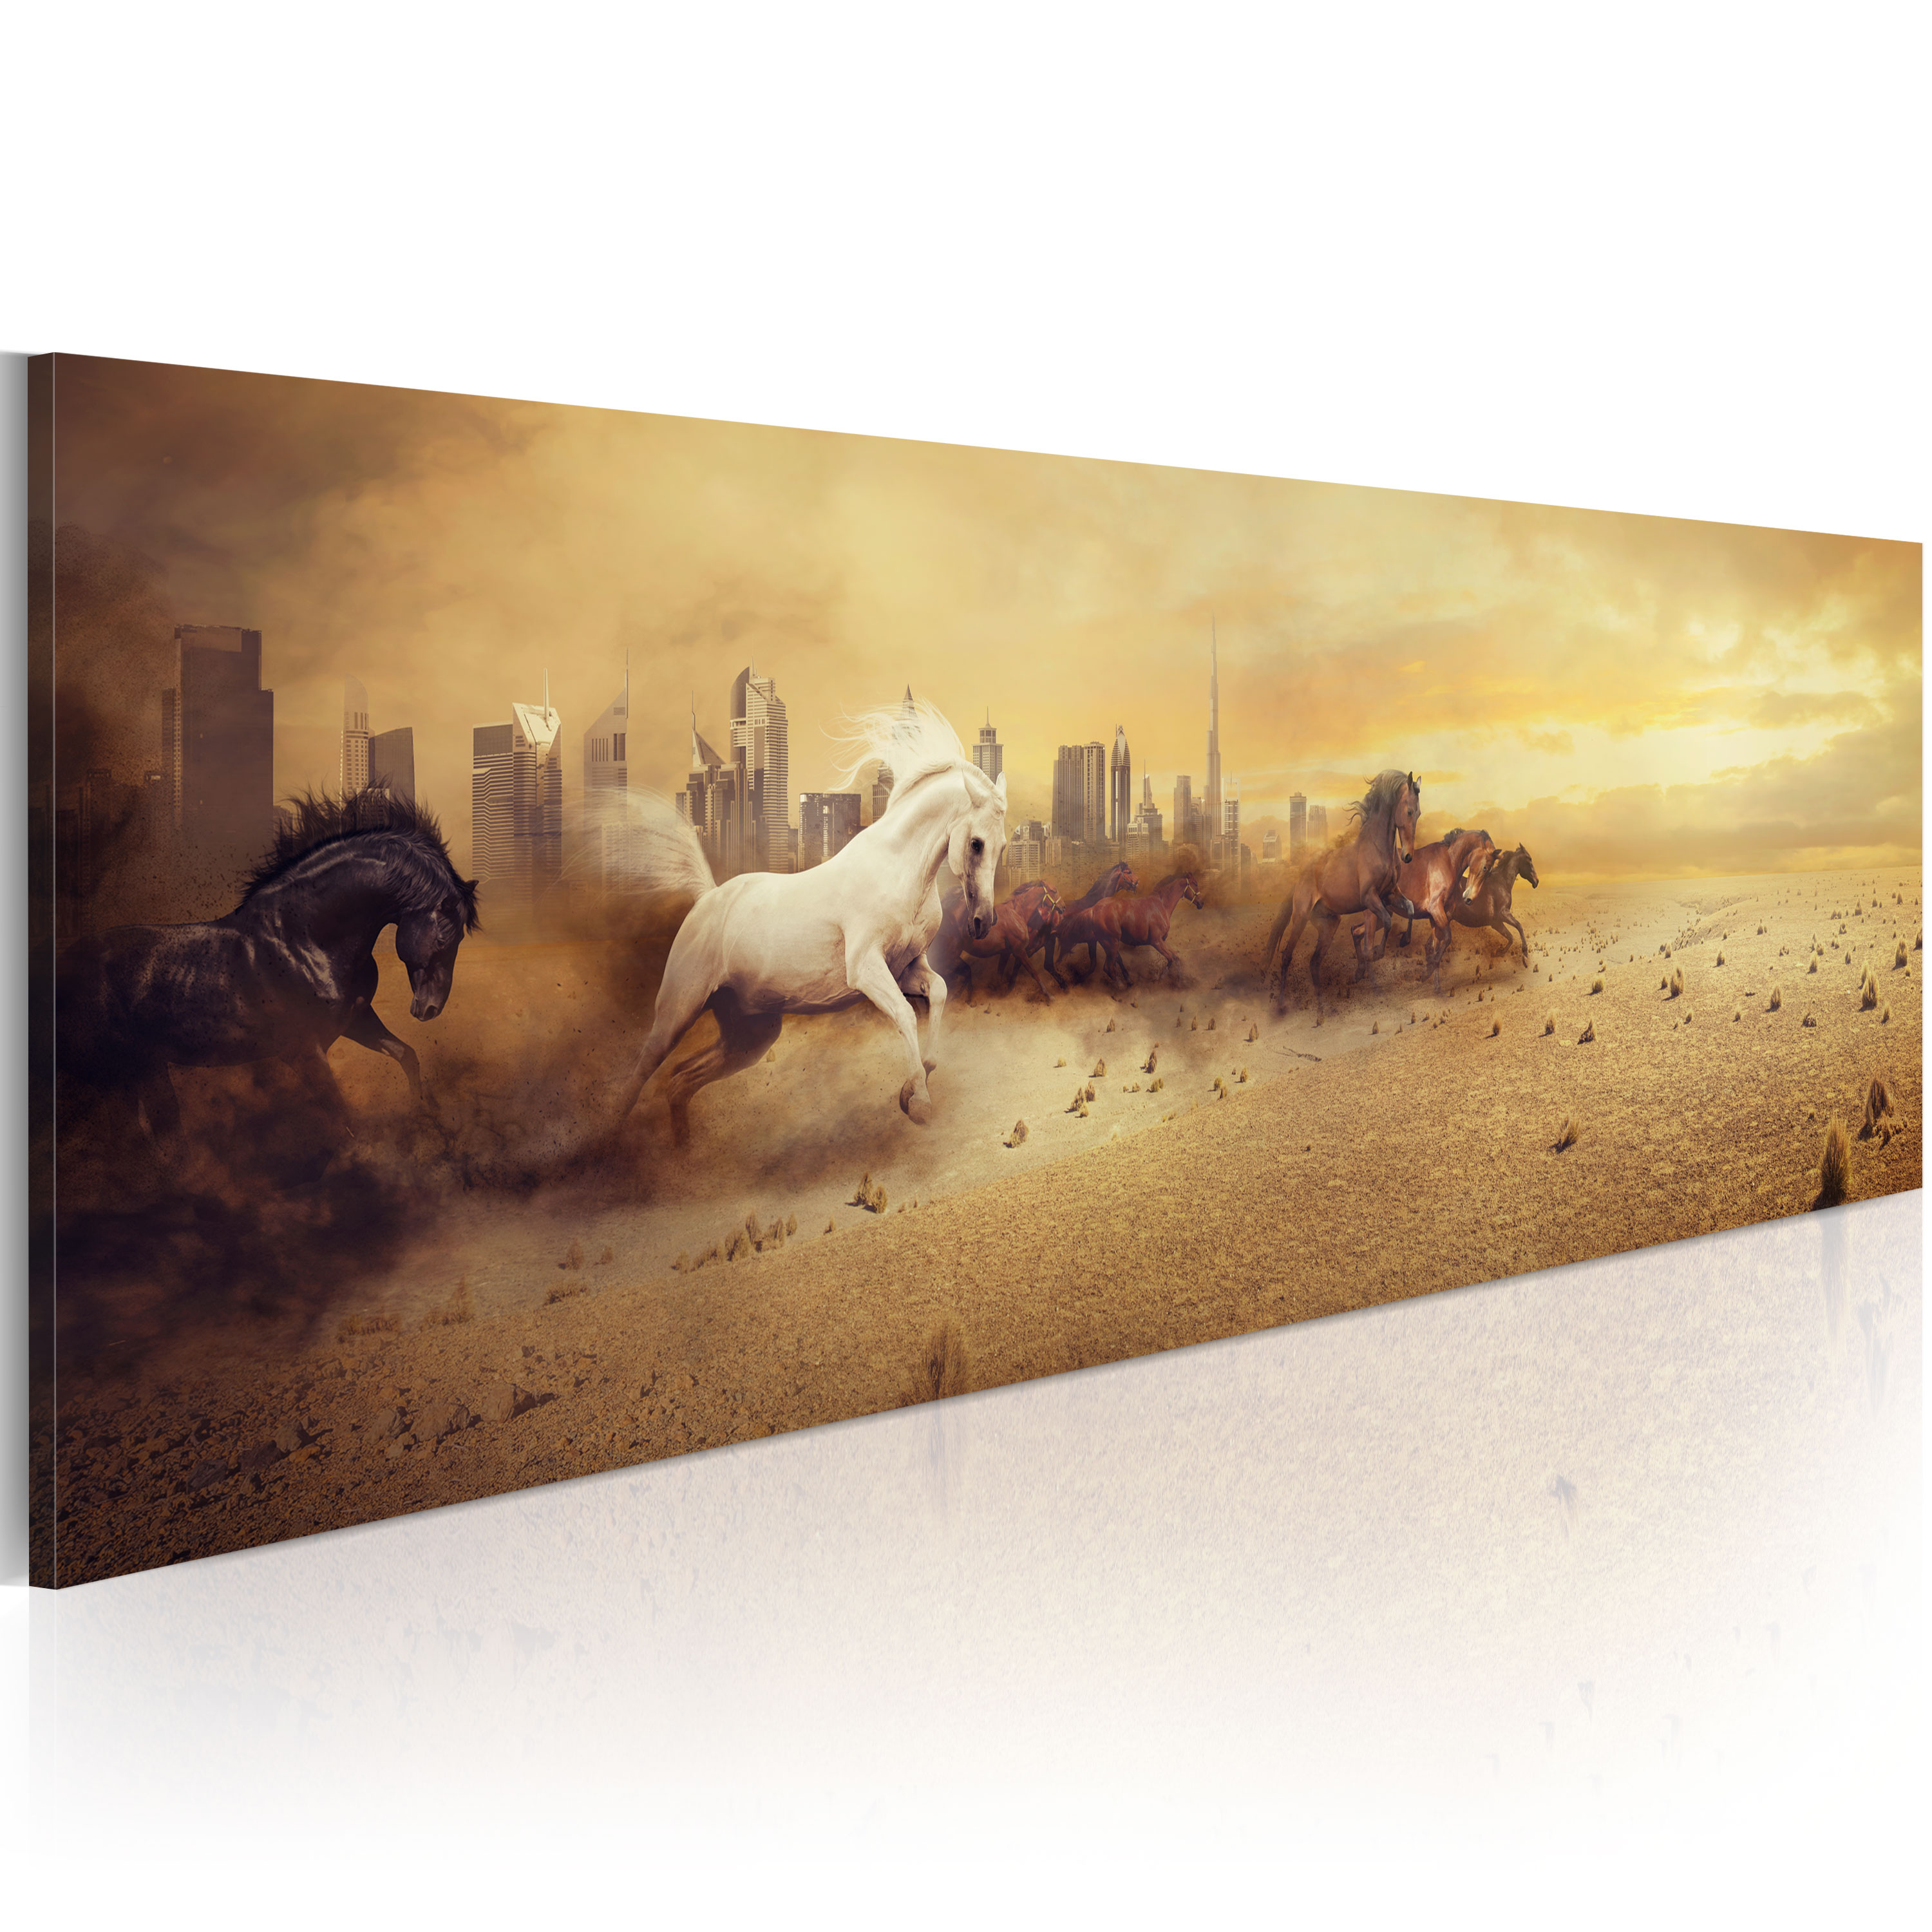 Canvas Print - City of stallions - 135x45